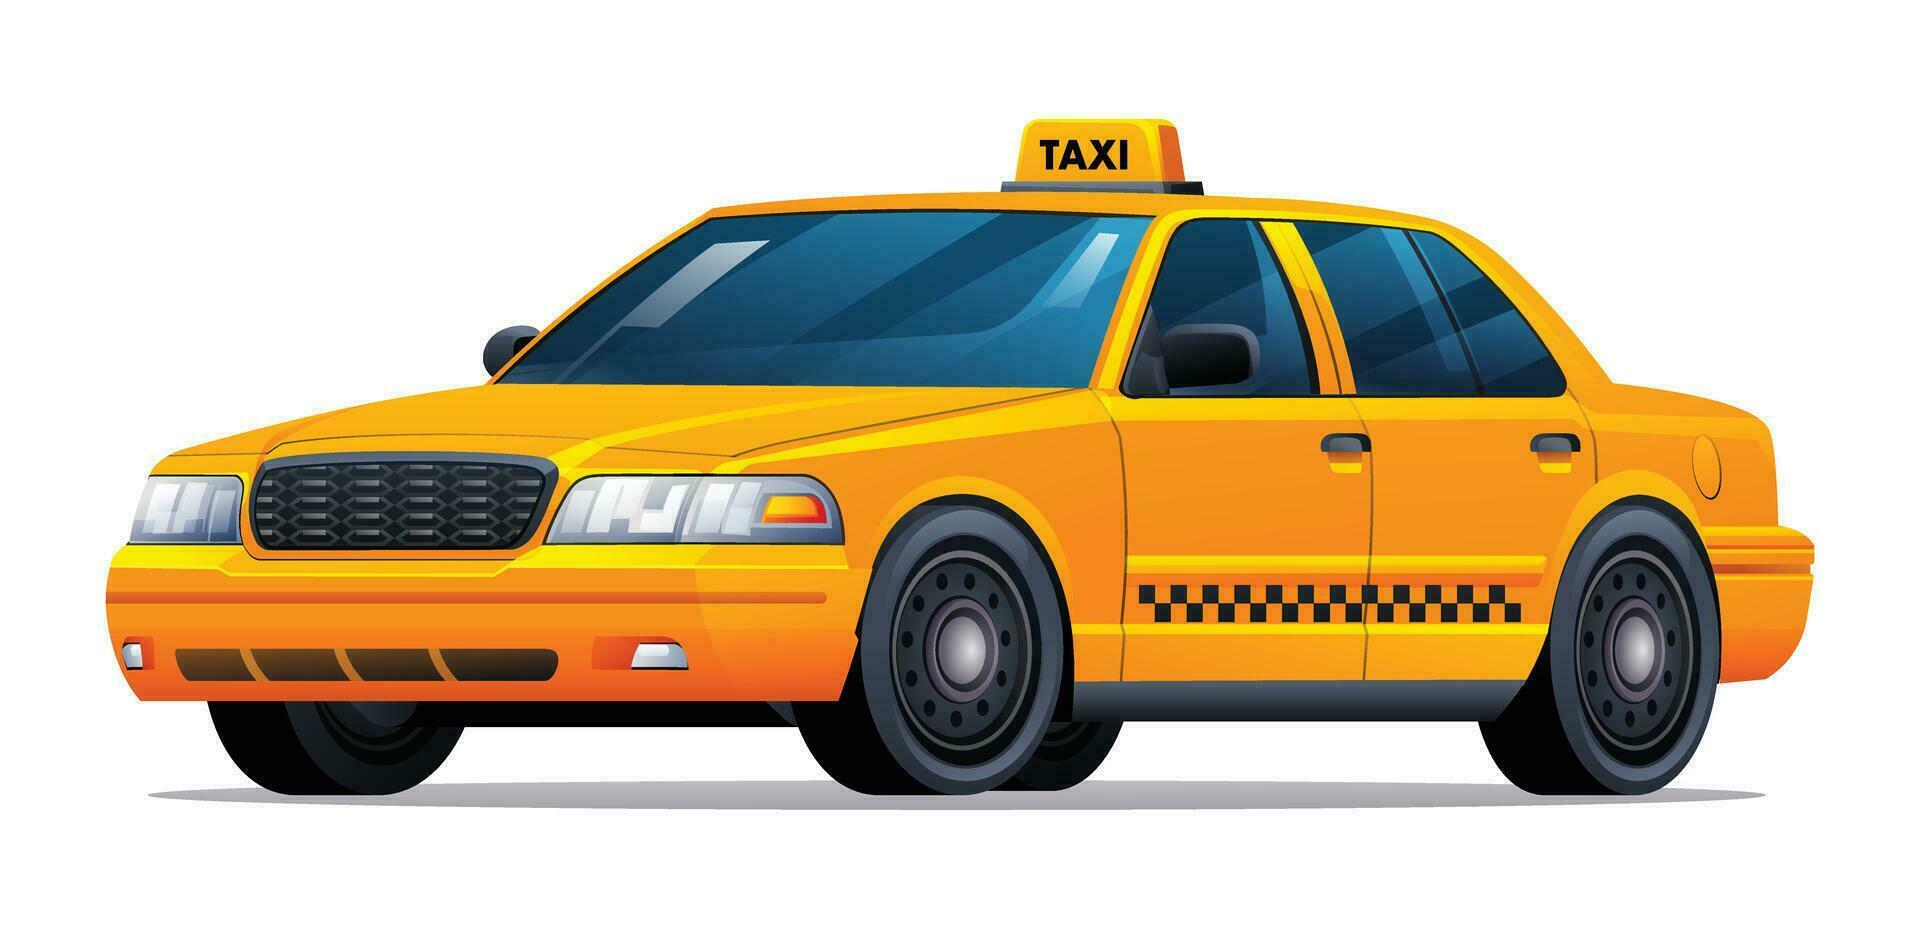 amarillo Taxi coche vector ilustración aislado en blanco antecedentes